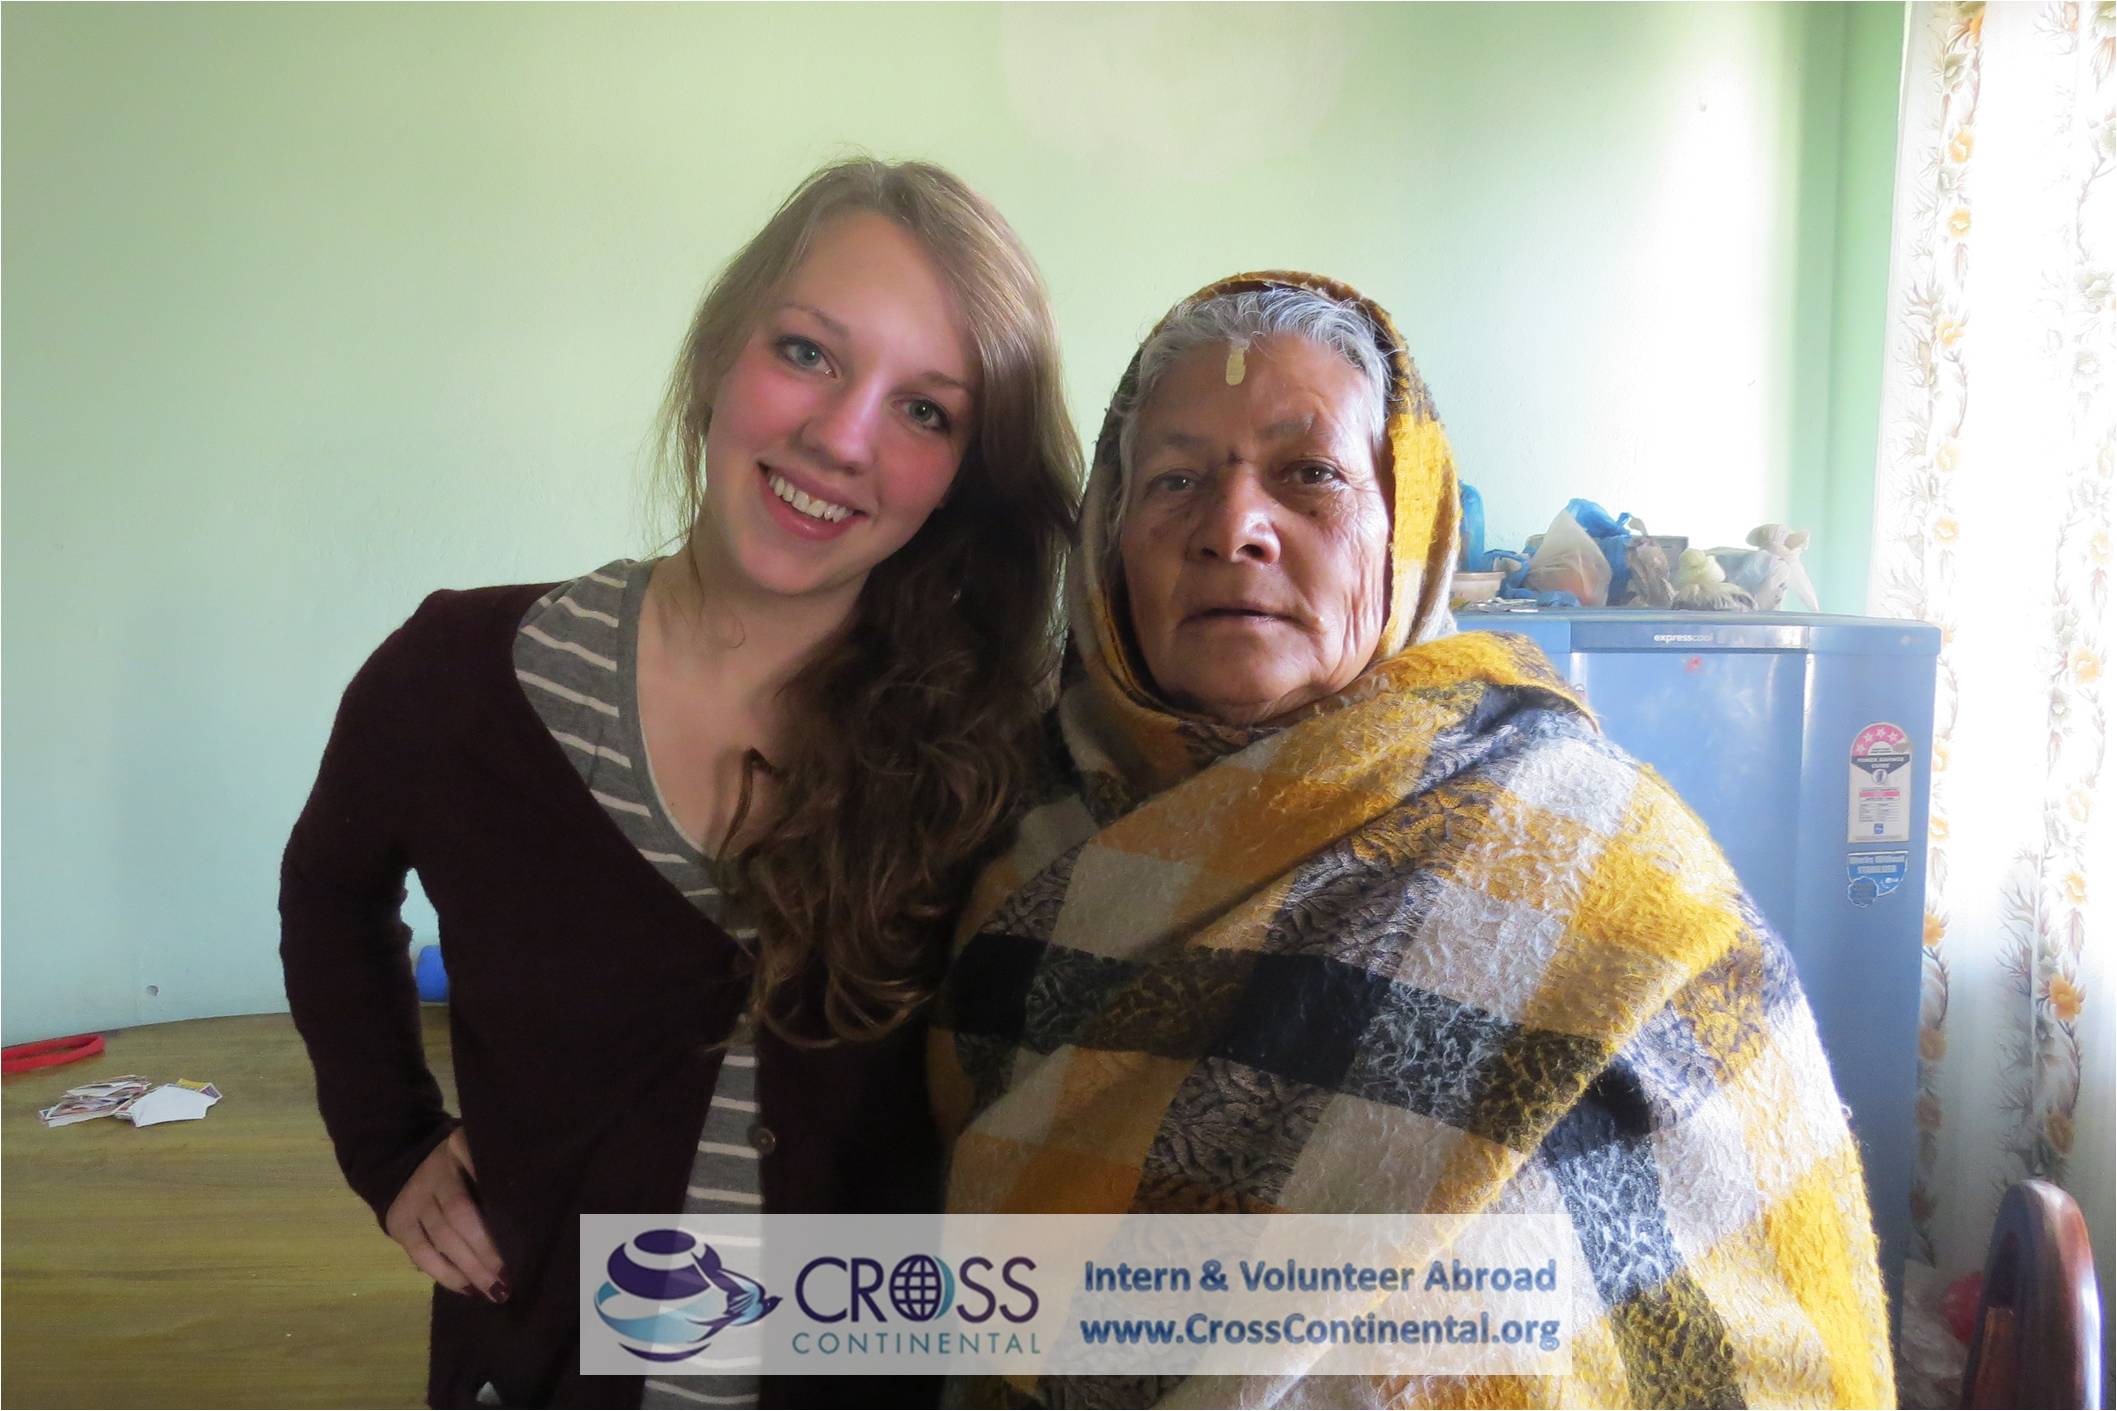 Empowering Women through Internships Abroad